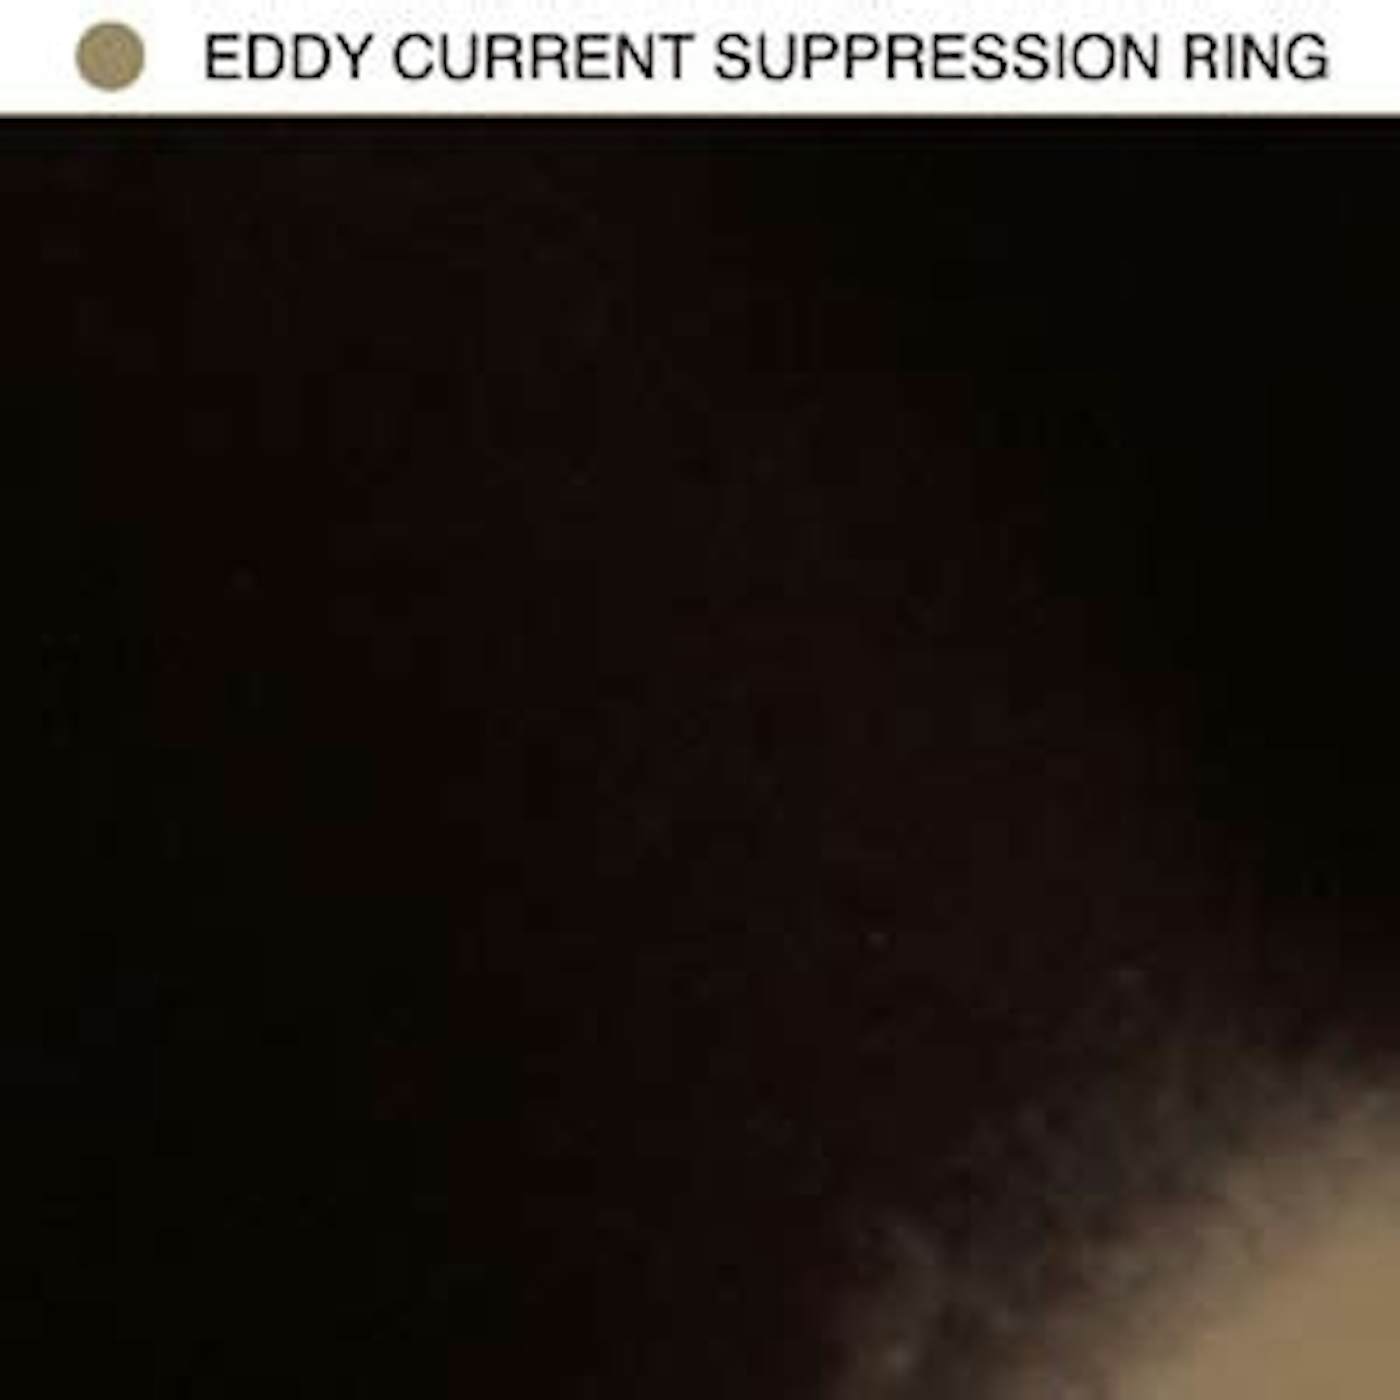 Eddy Current Suppression Ring EDDY CURRENT SUPRESSION RING Vinyl Record